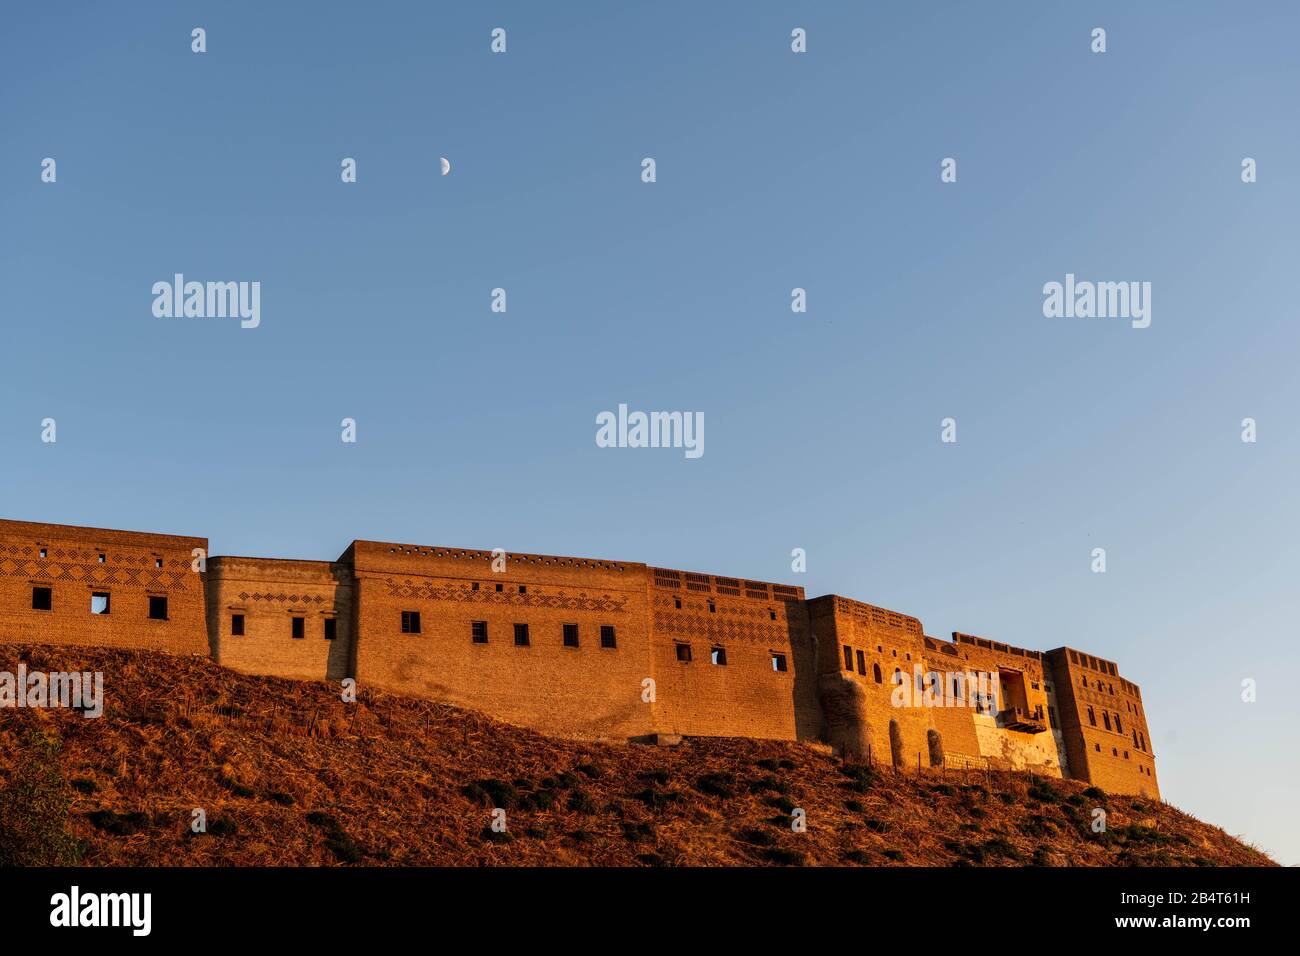 Iraq, Iraqi Kurdistan, Arbil, Erbil. View of the Qalat citadel at sunset. In the backgroun, the moon is shining. Stock Photo